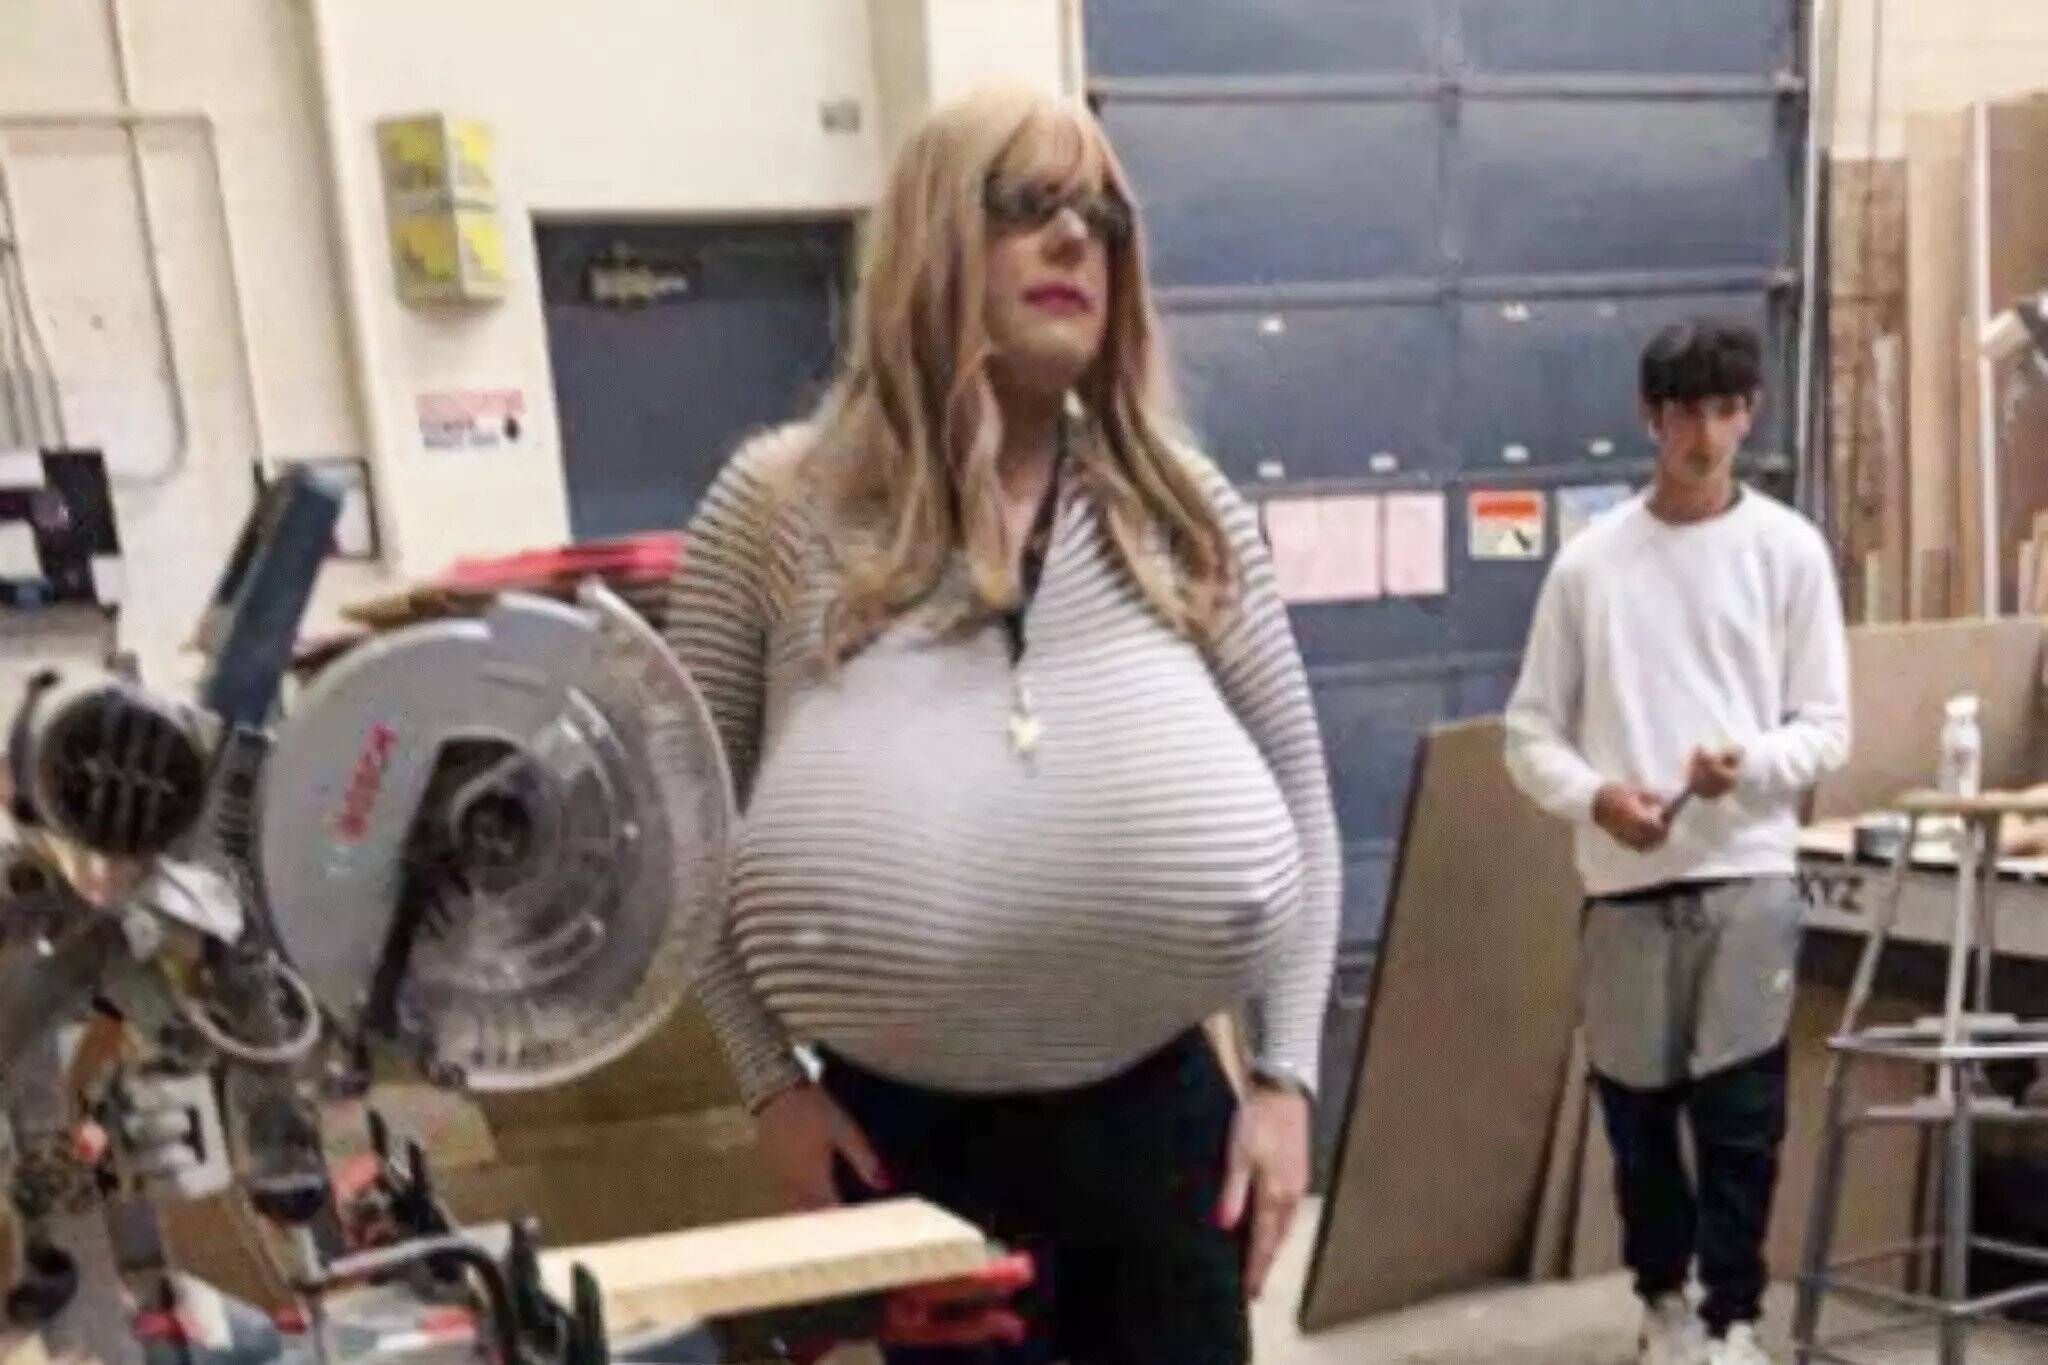 School Tesar - Students warned not to take photos of Oakville teacher who wears huge  prosthetic breasts